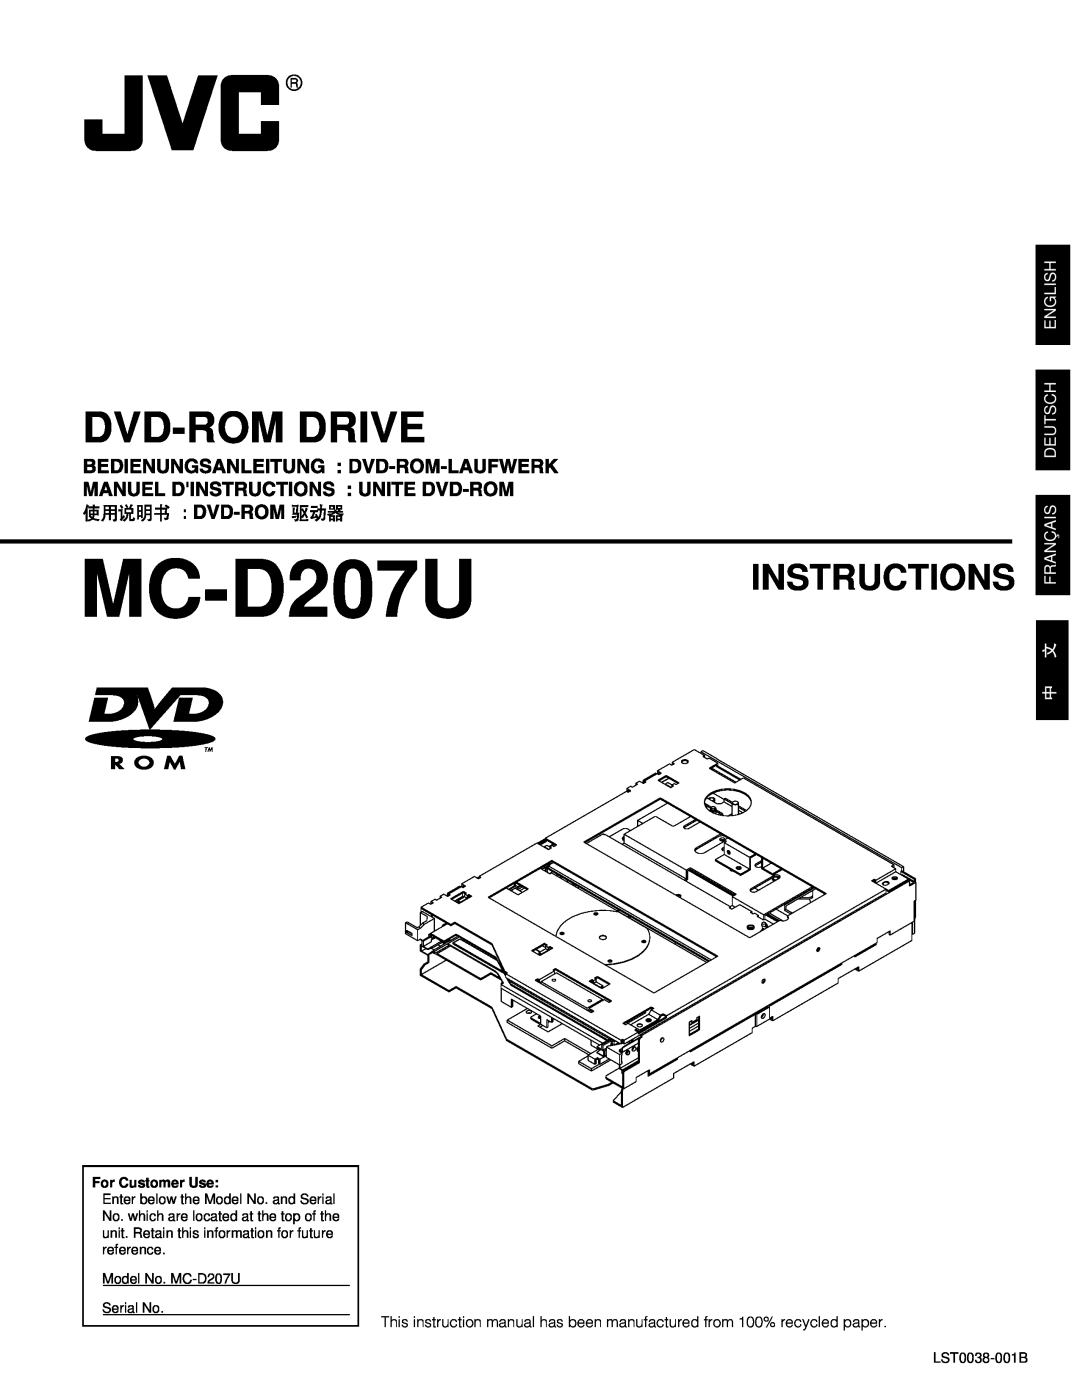 JVC MC-D207U instruction manual Dvd-Rom Drive, Instructions, Français Deutsch English, For Customer Use 